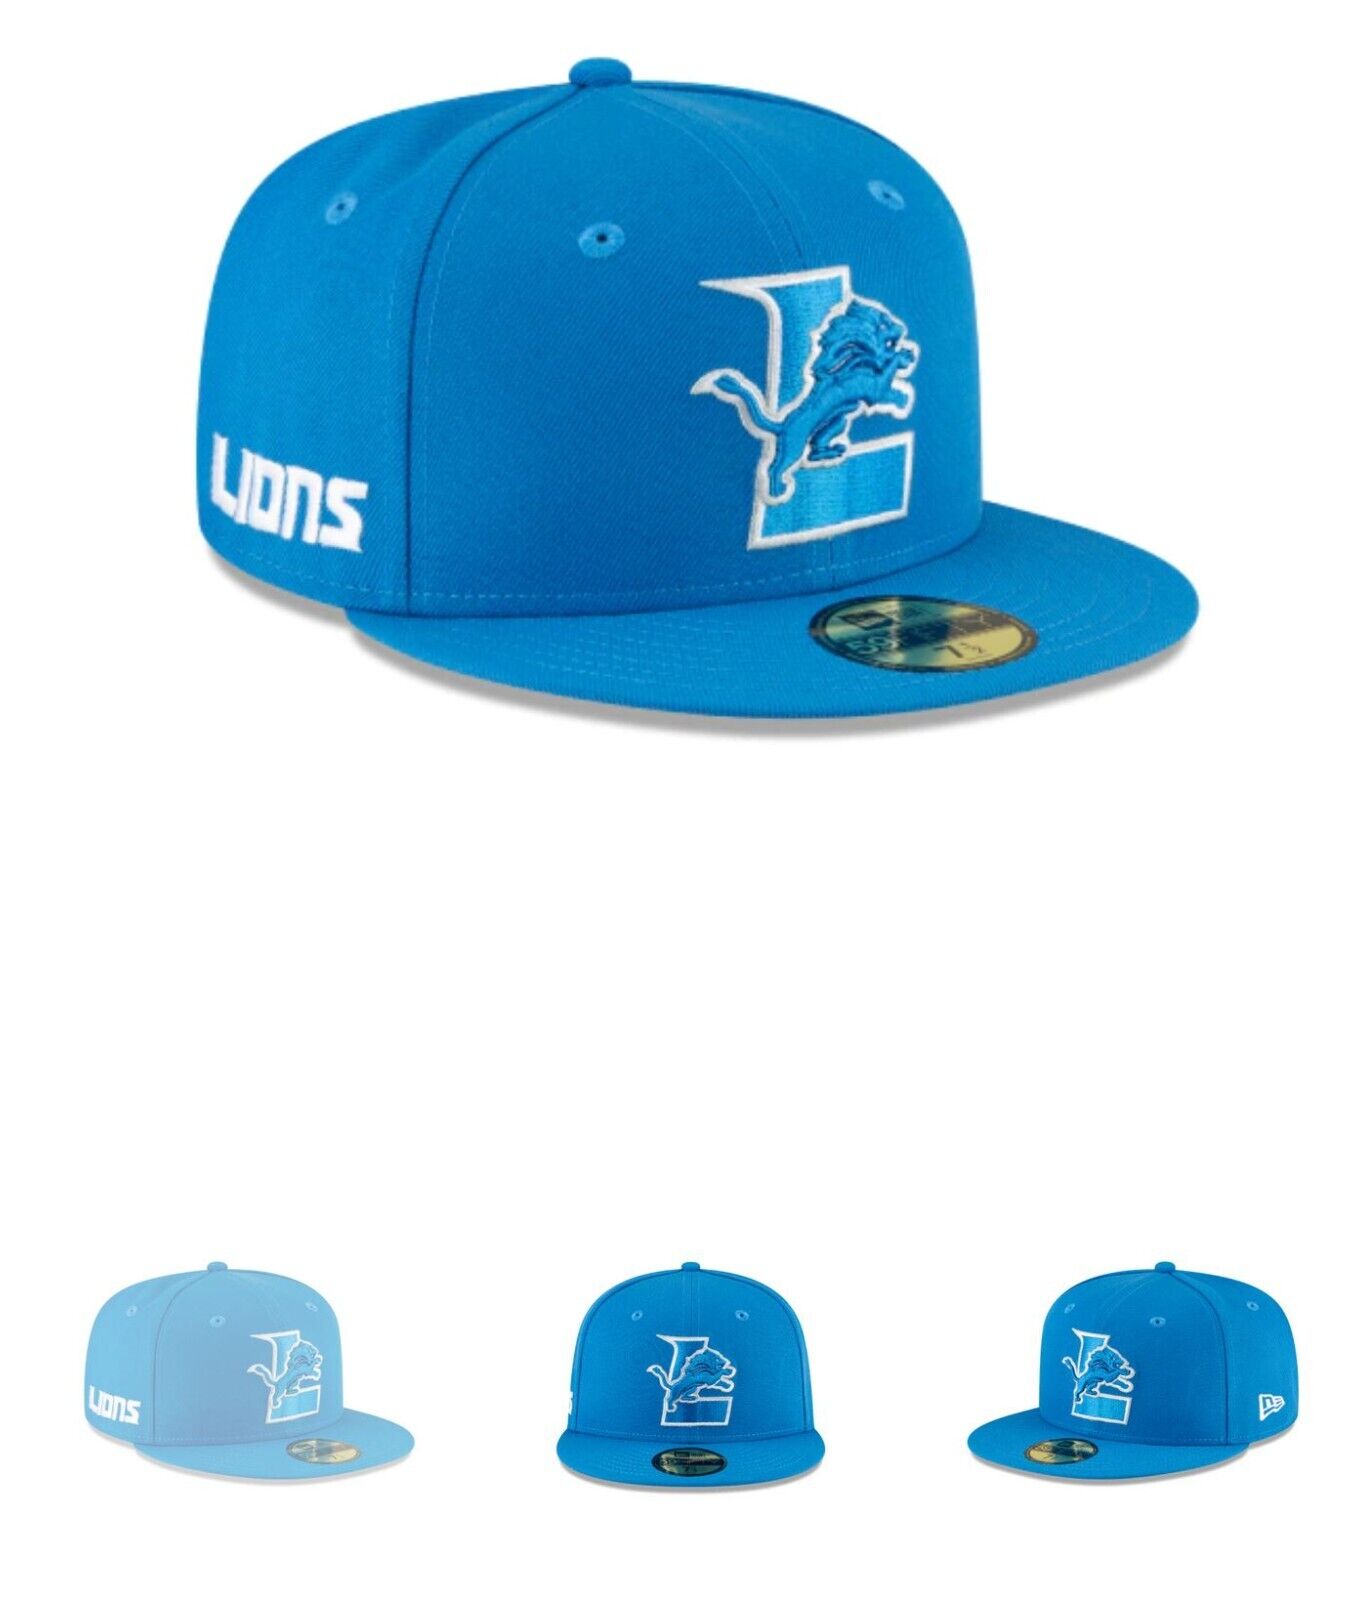 New Era DETROIT LIONS 59FIFTY LOW PROFILE LOG MIX BLUE 'L' Fitted Hat CAP  SZ 8